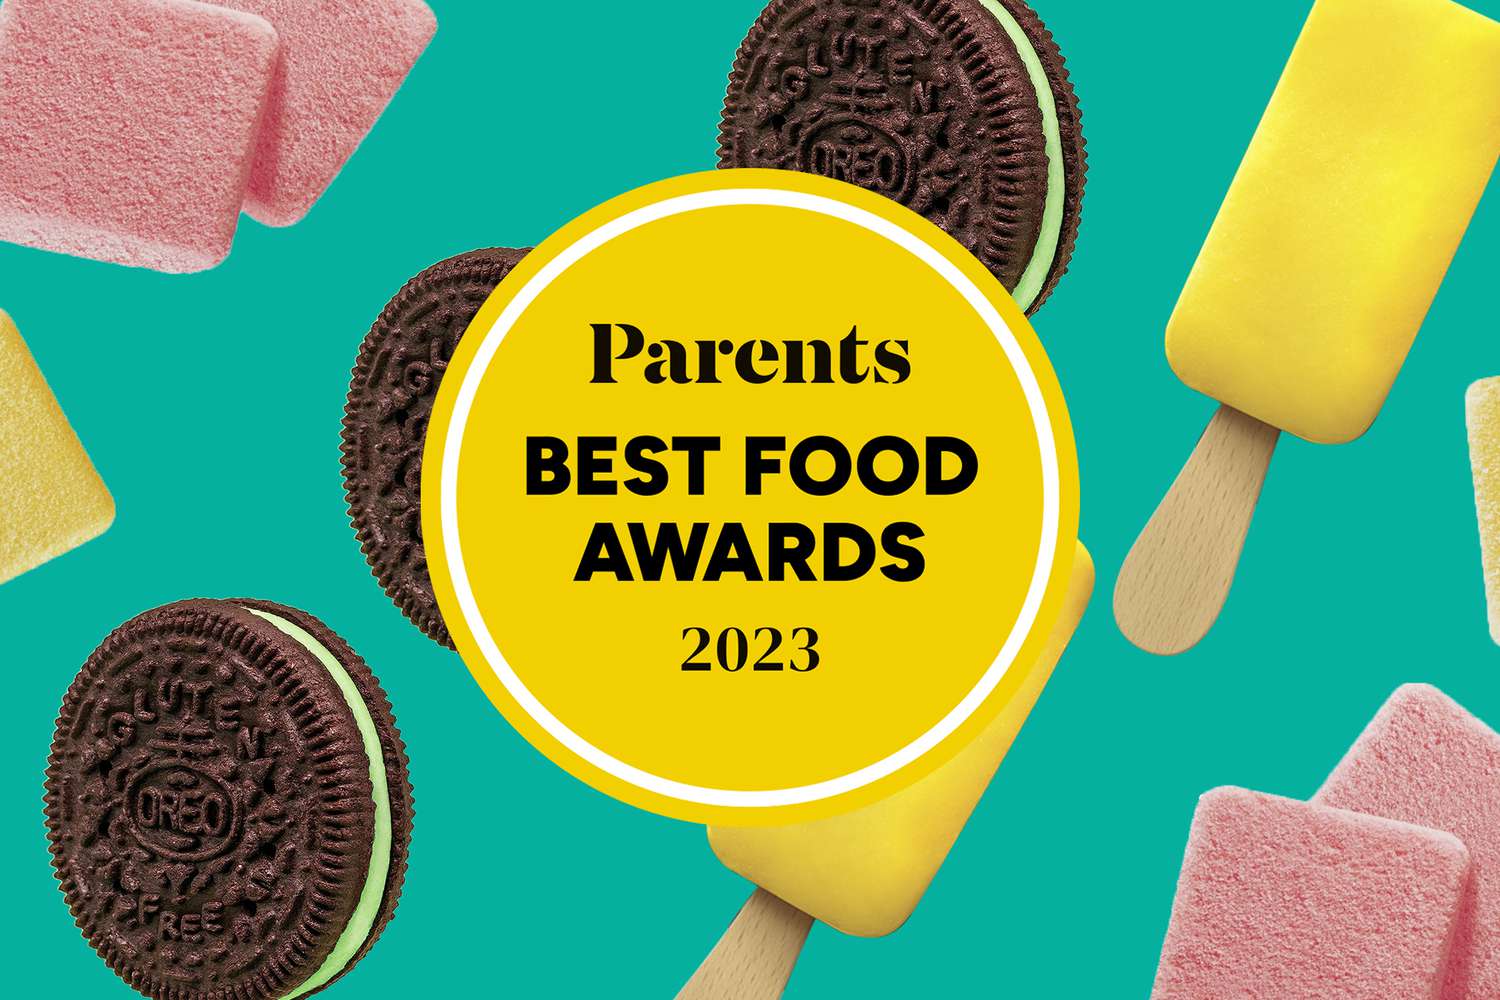 Premios Parents Best Food Awards 2023